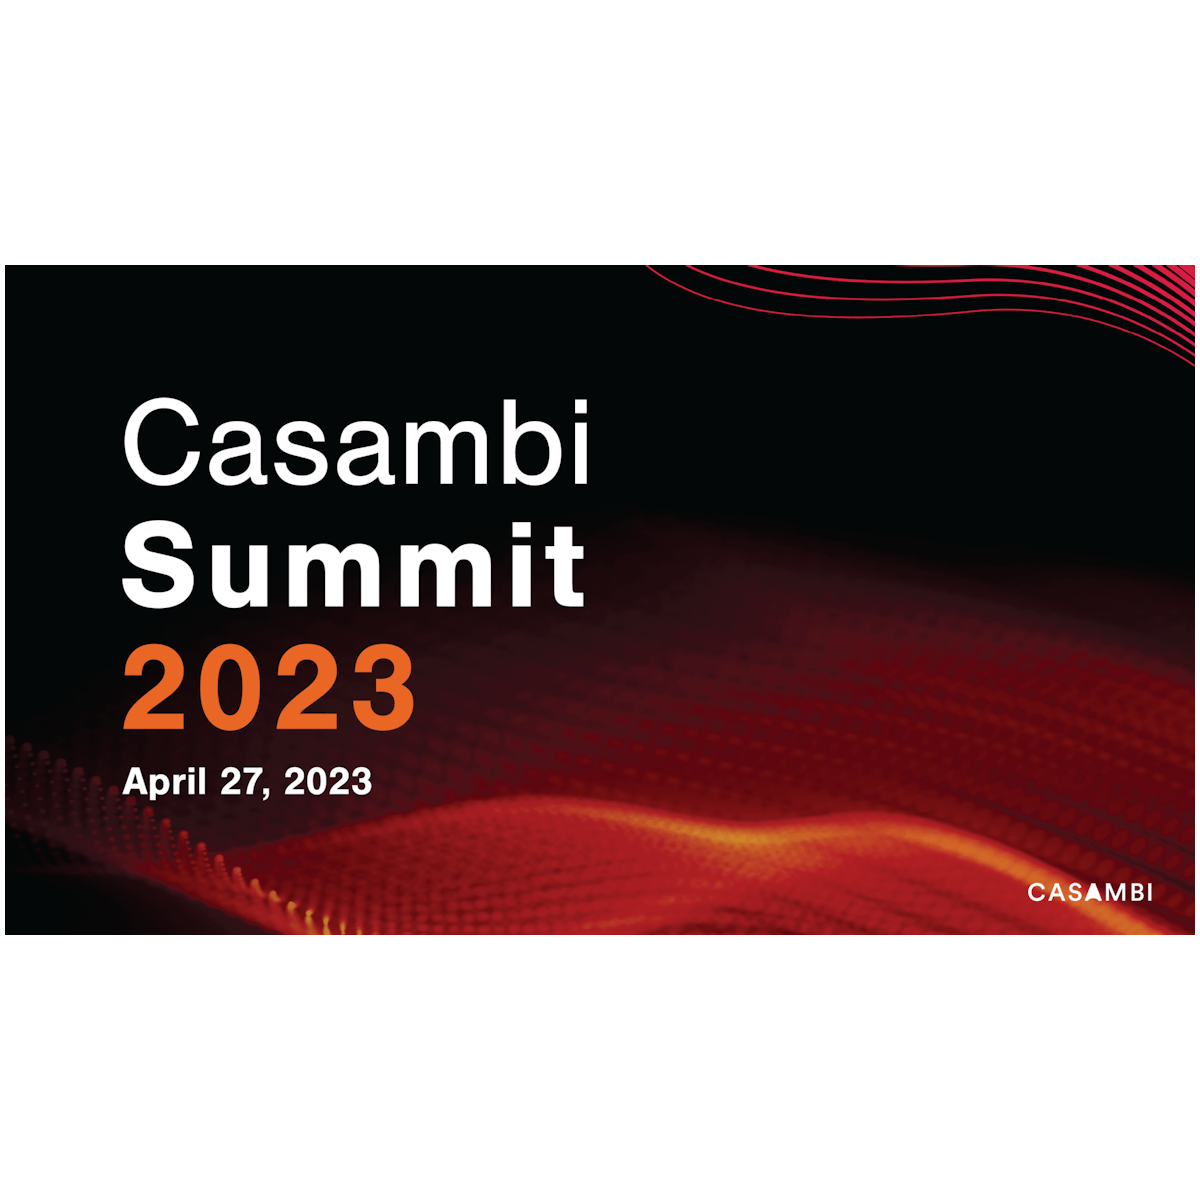 Casambi Summit Smart Lighting